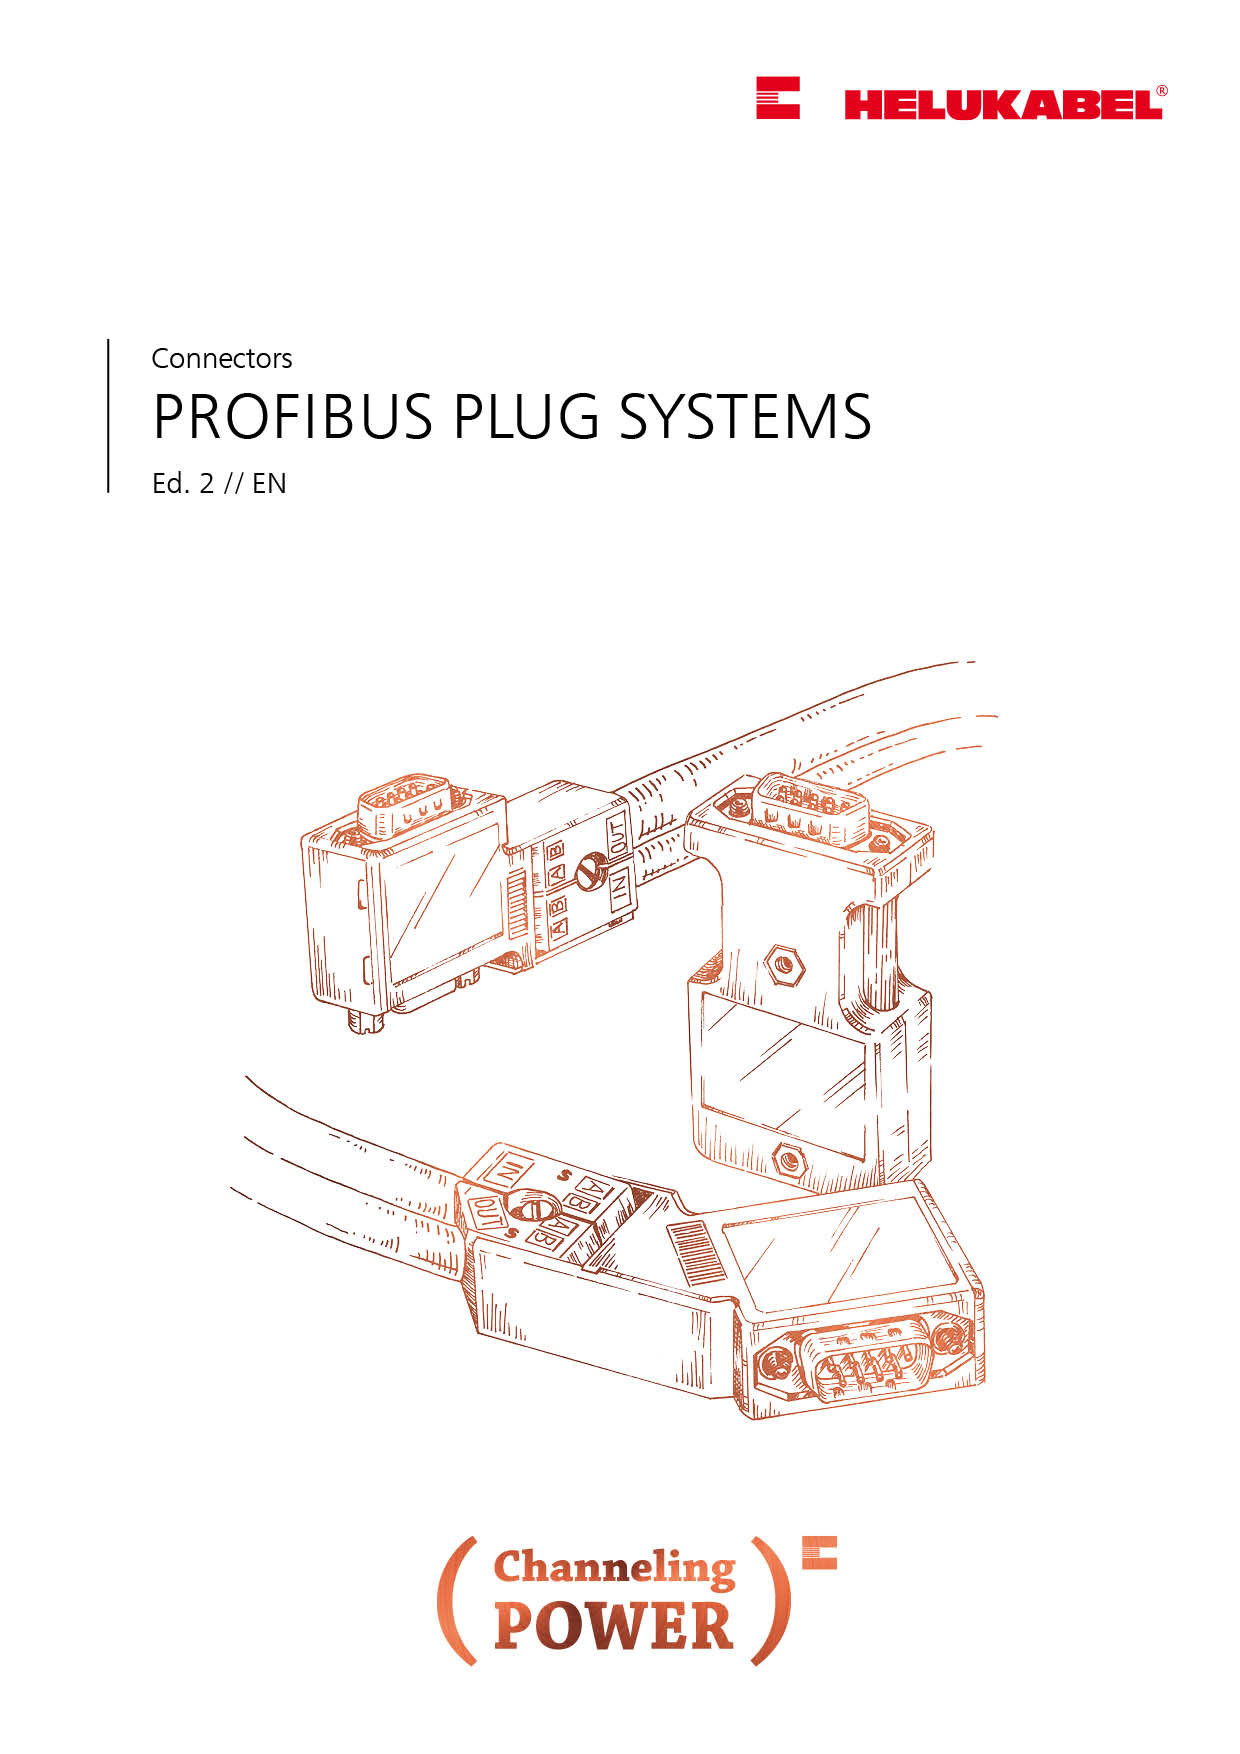 PROFIBUS Plug Systems